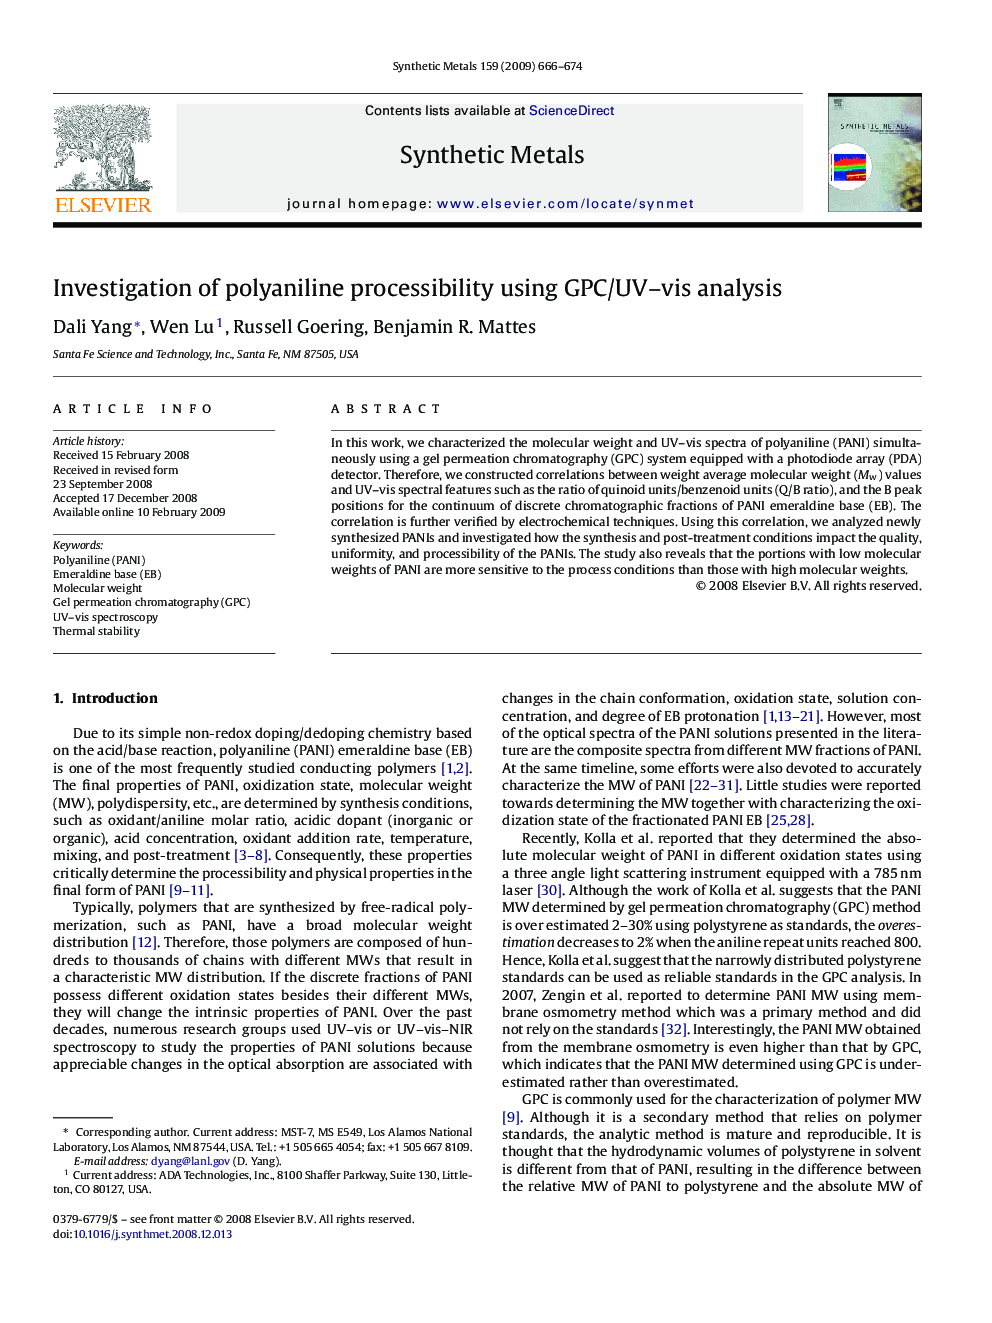 Investigation of polyaniline processibility using GPC/UV–vis analysis